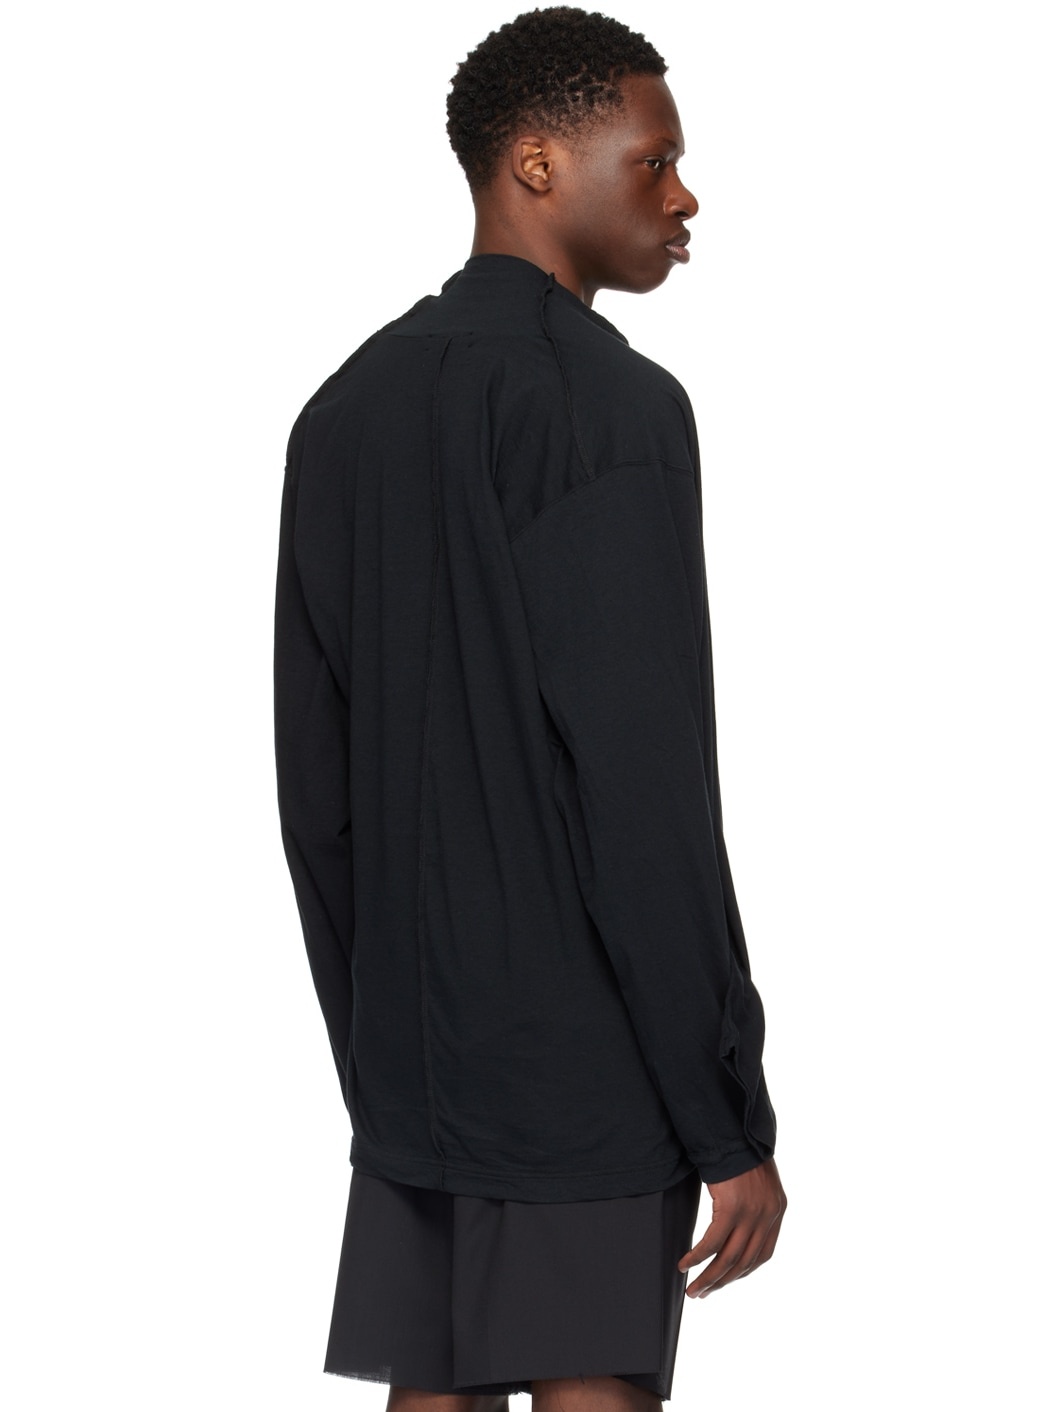 Black Layered Sweatshirt - 3